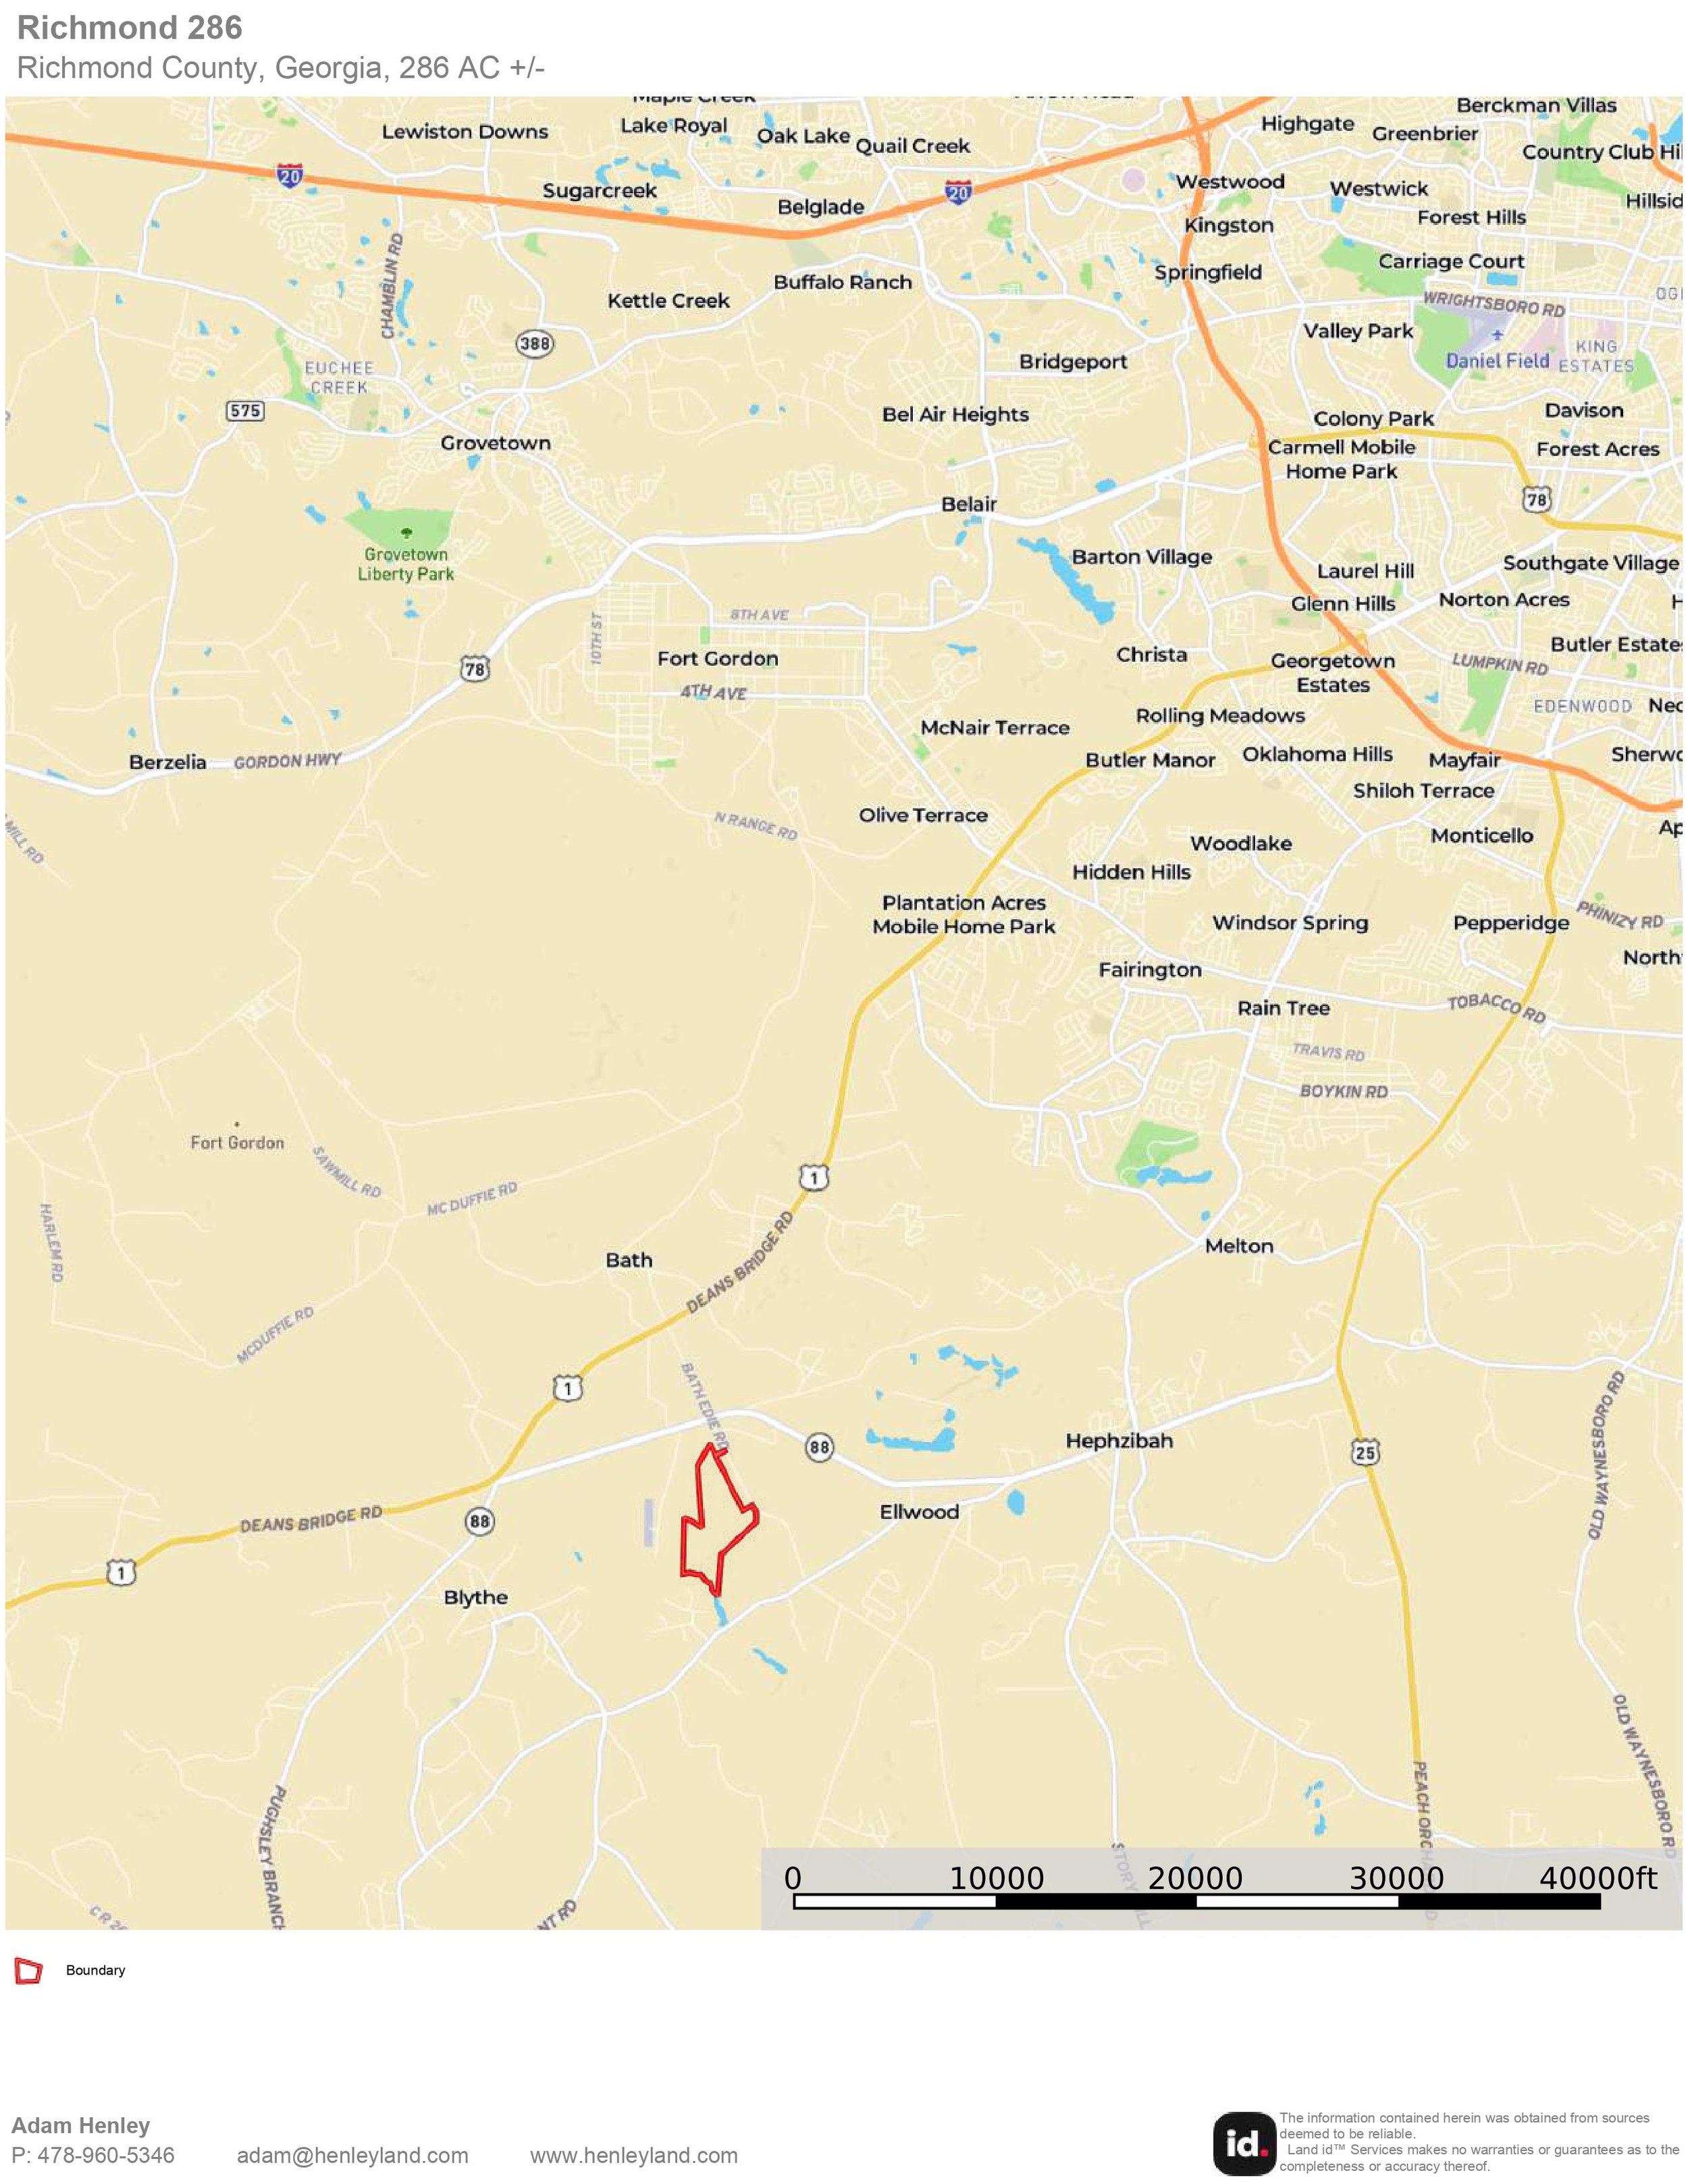 Richmond 286 - Location Map.jpg